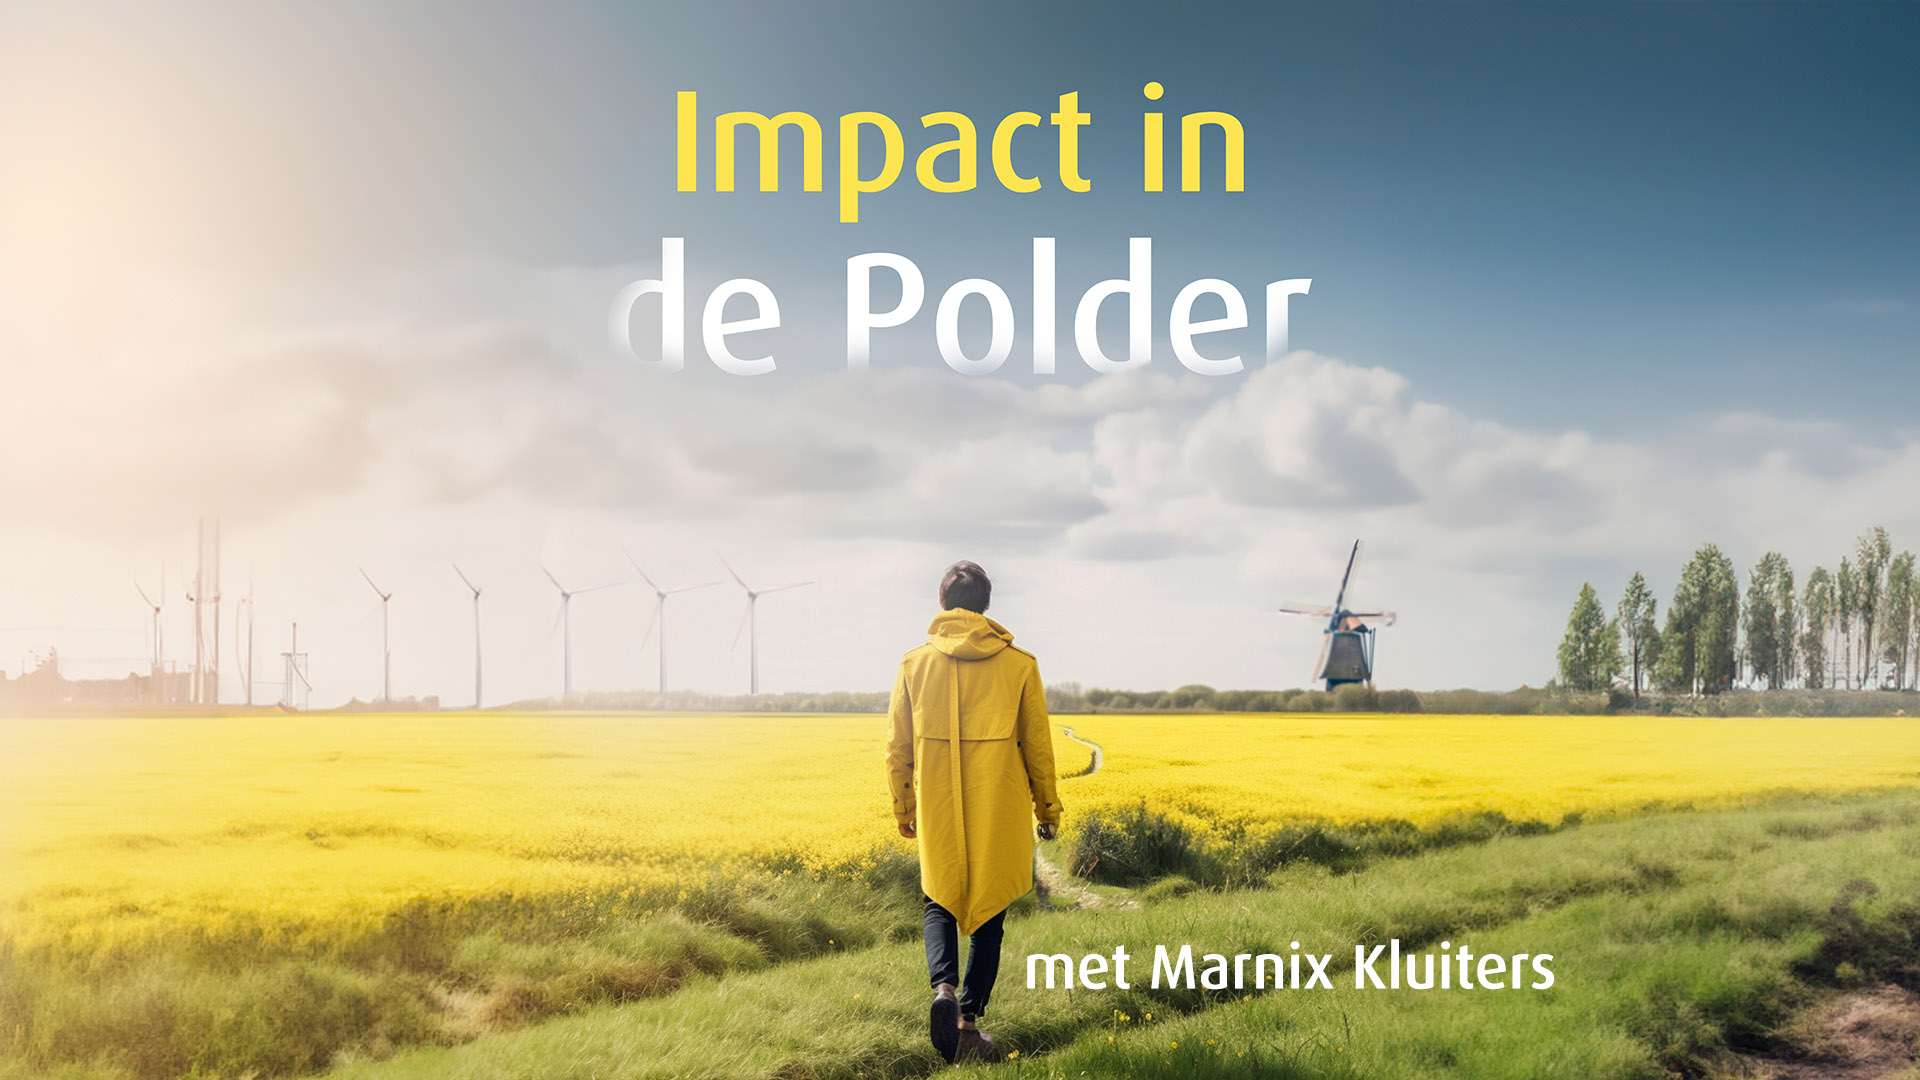 Podcast SER : Impact in de polder